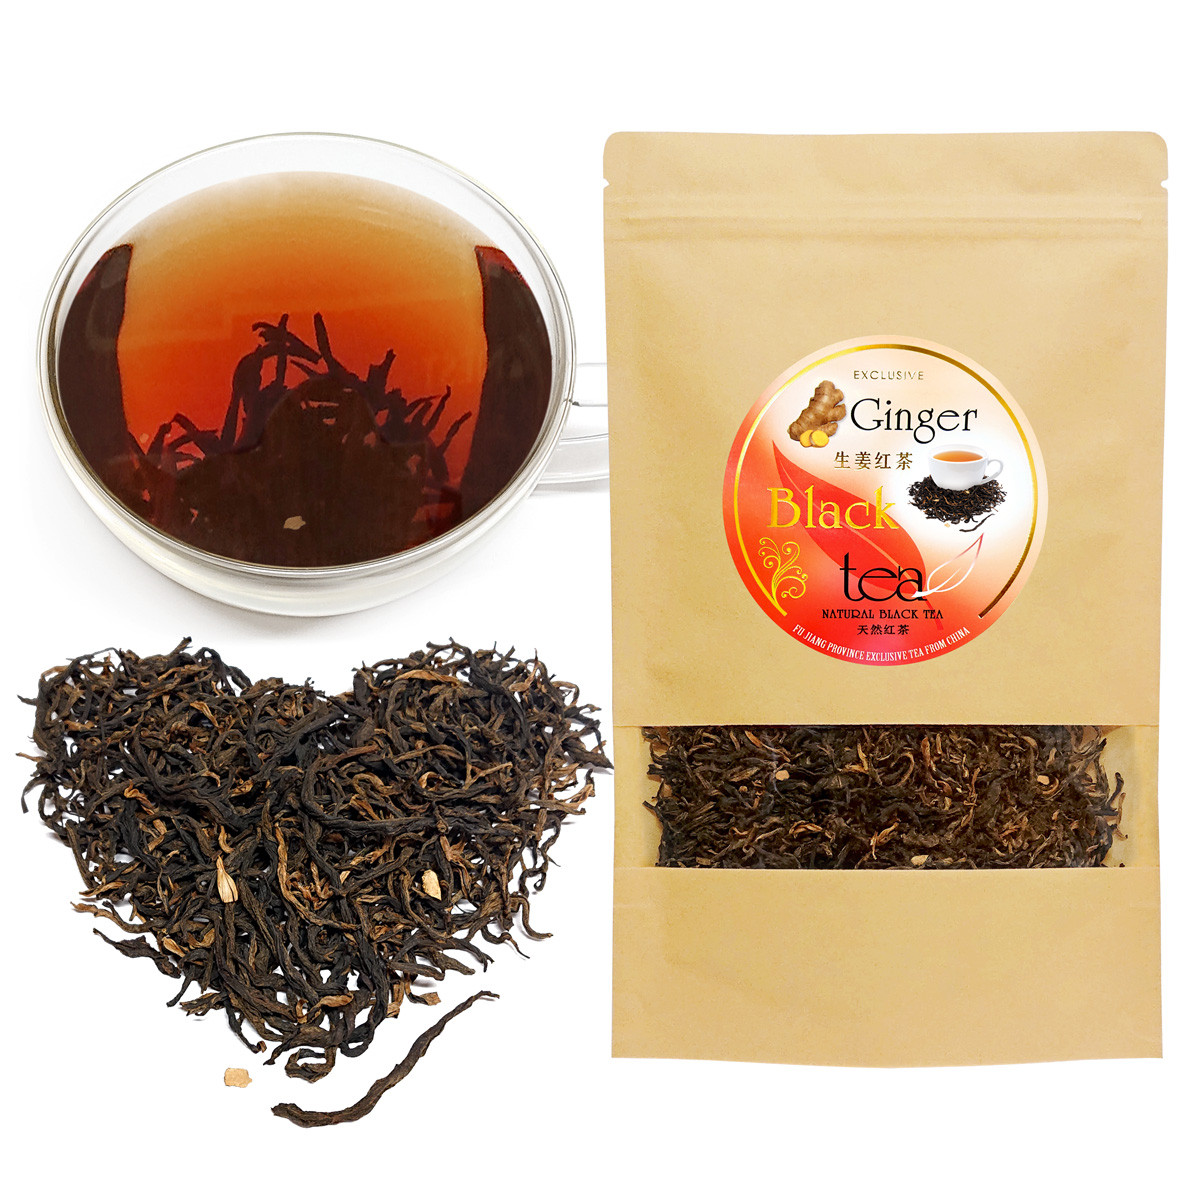 Ginger Black tea MAO FENG - чай с ИМБИРЕМ 100г Чёрный чай